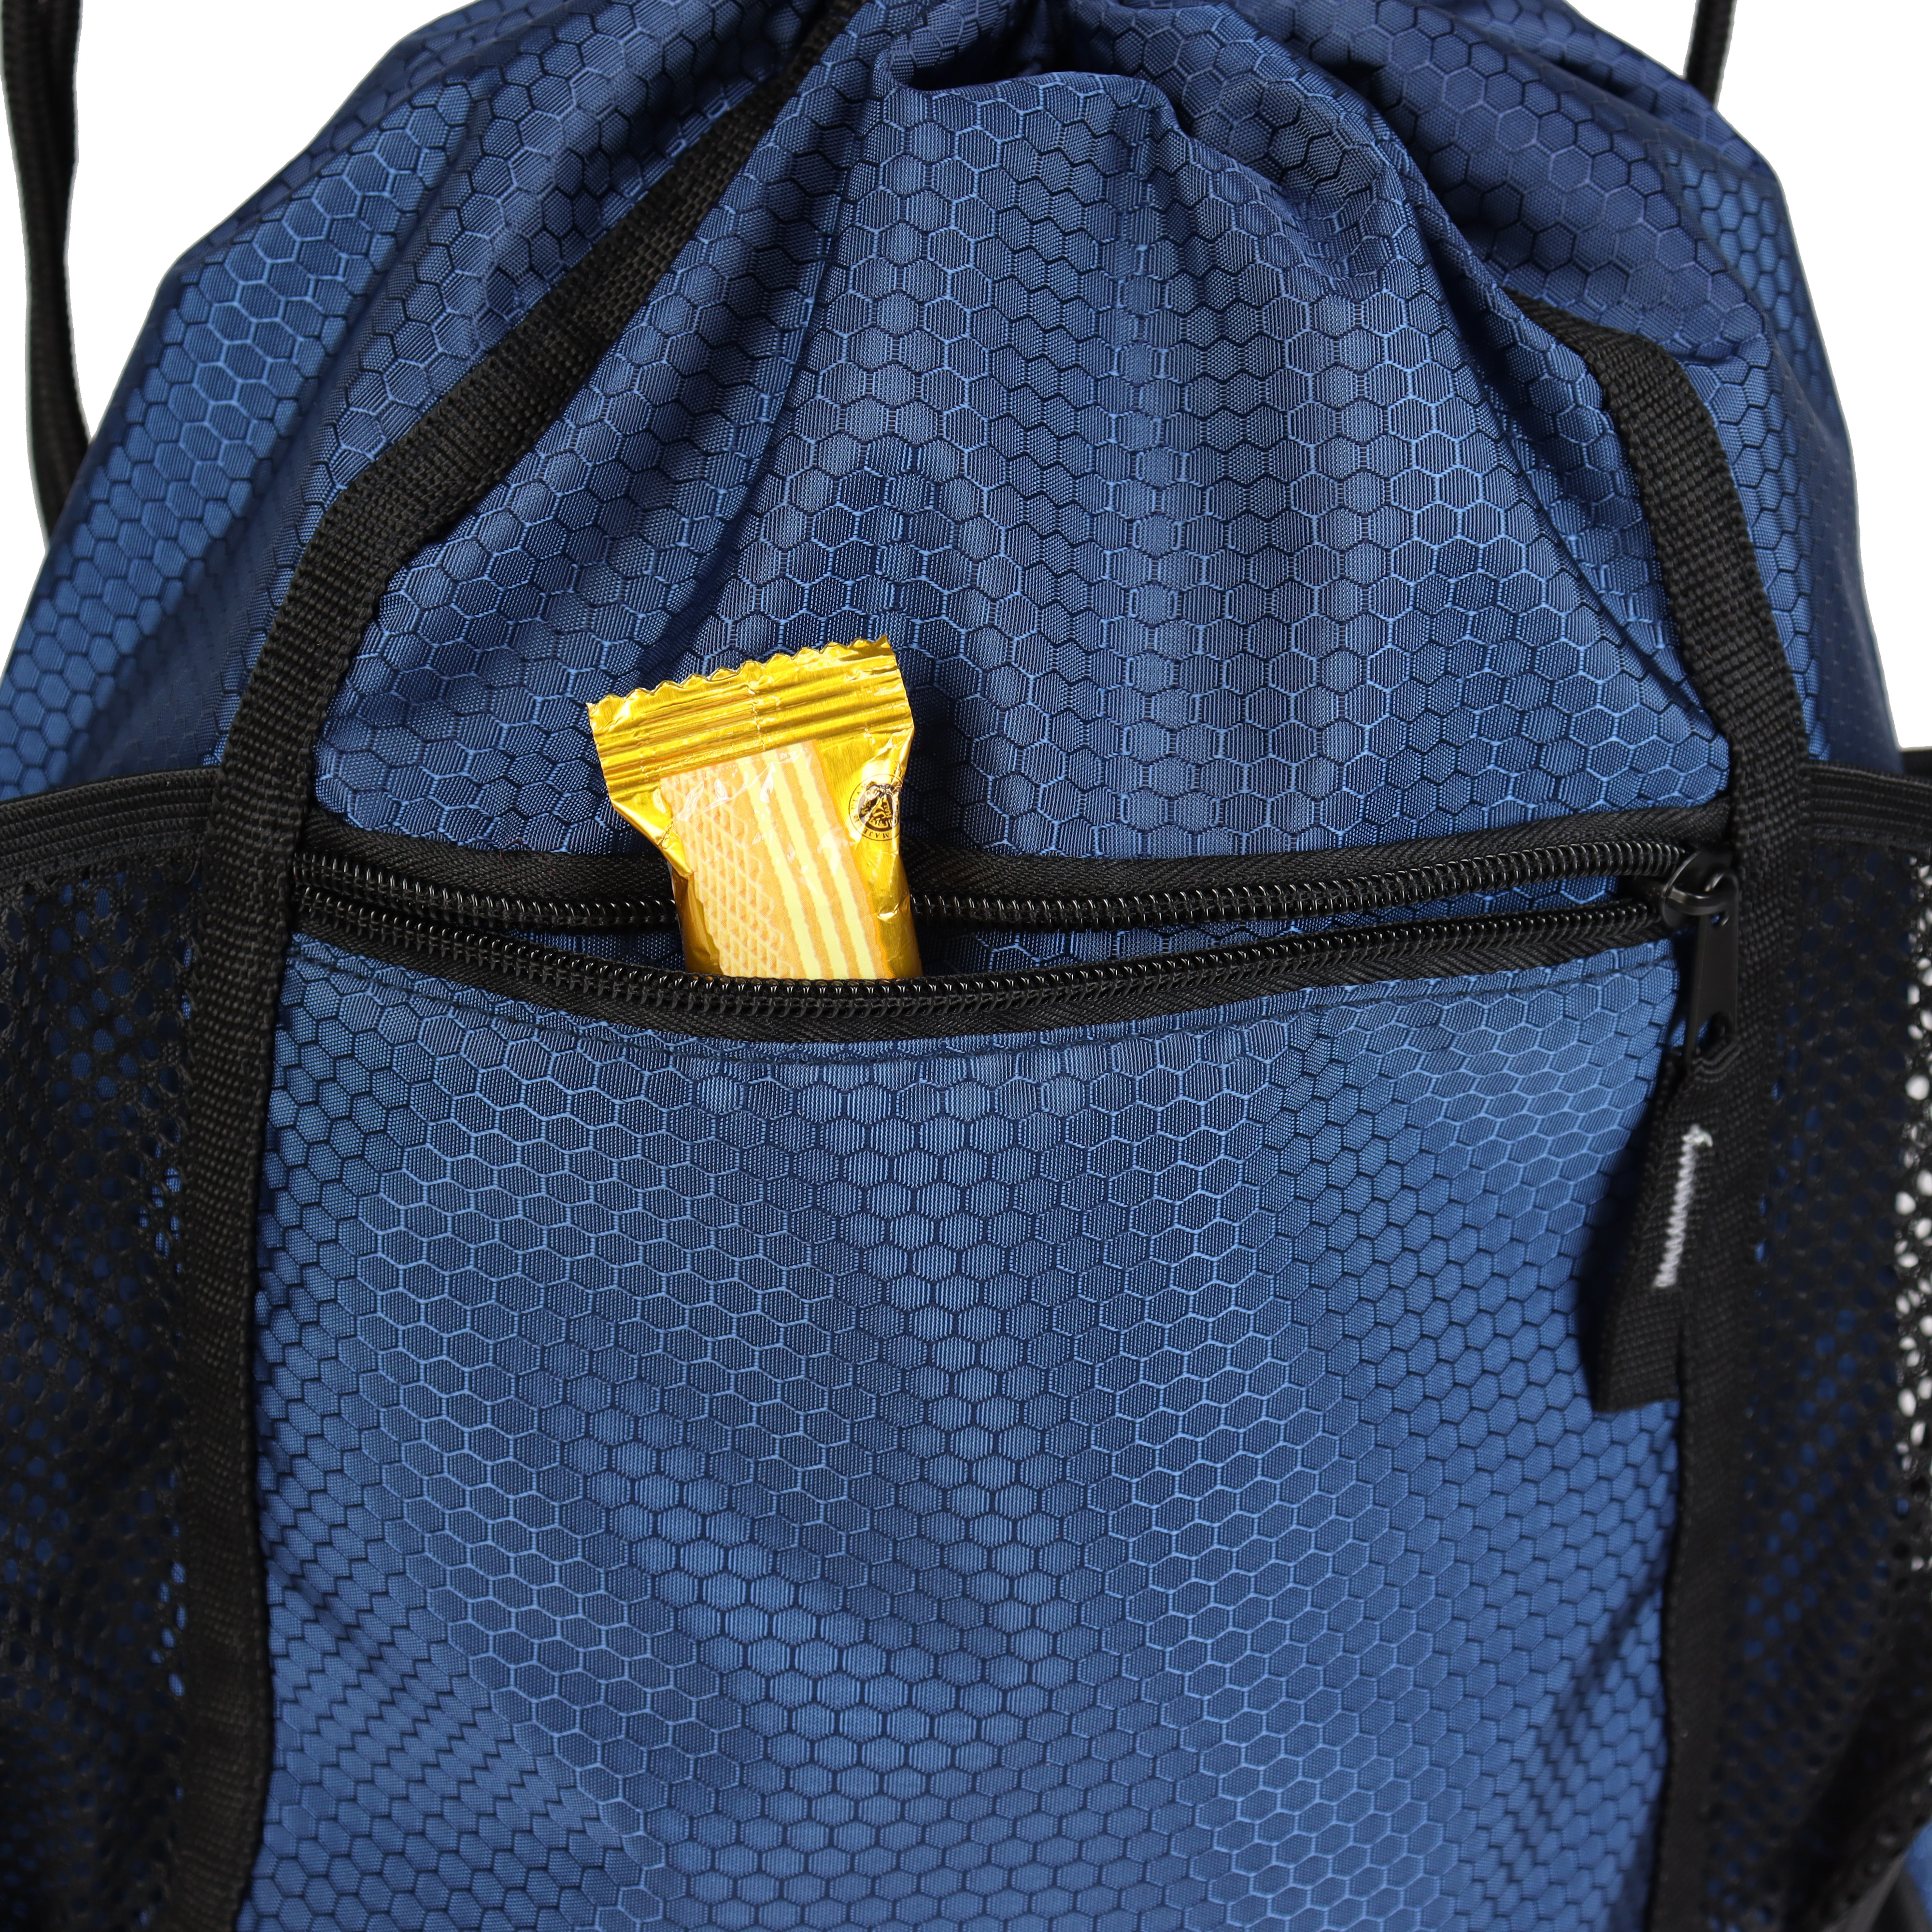 Drawstring backpack school bag